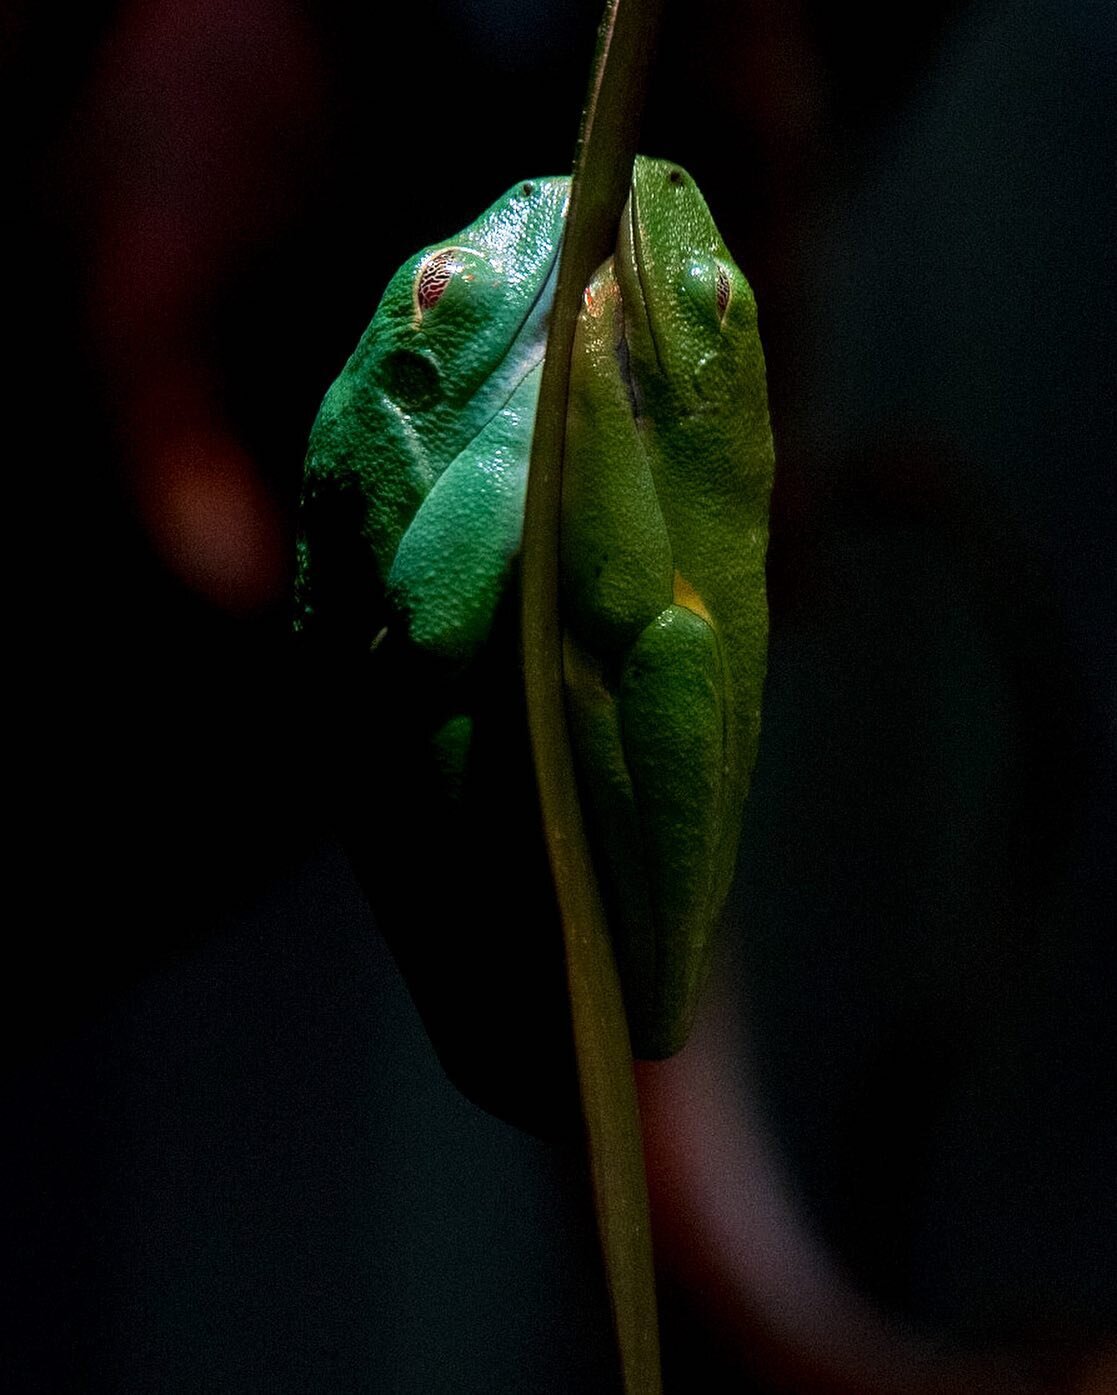 Duality
- - - - -
#frog #frogs #amphibian #fineart #fineartphotography #art #artist #artistsoninstagram #instagood #photooftheday #nikon #nikonusa #nikonphotography
- - - - -
1/640 | f8 | 3200 | 500mm